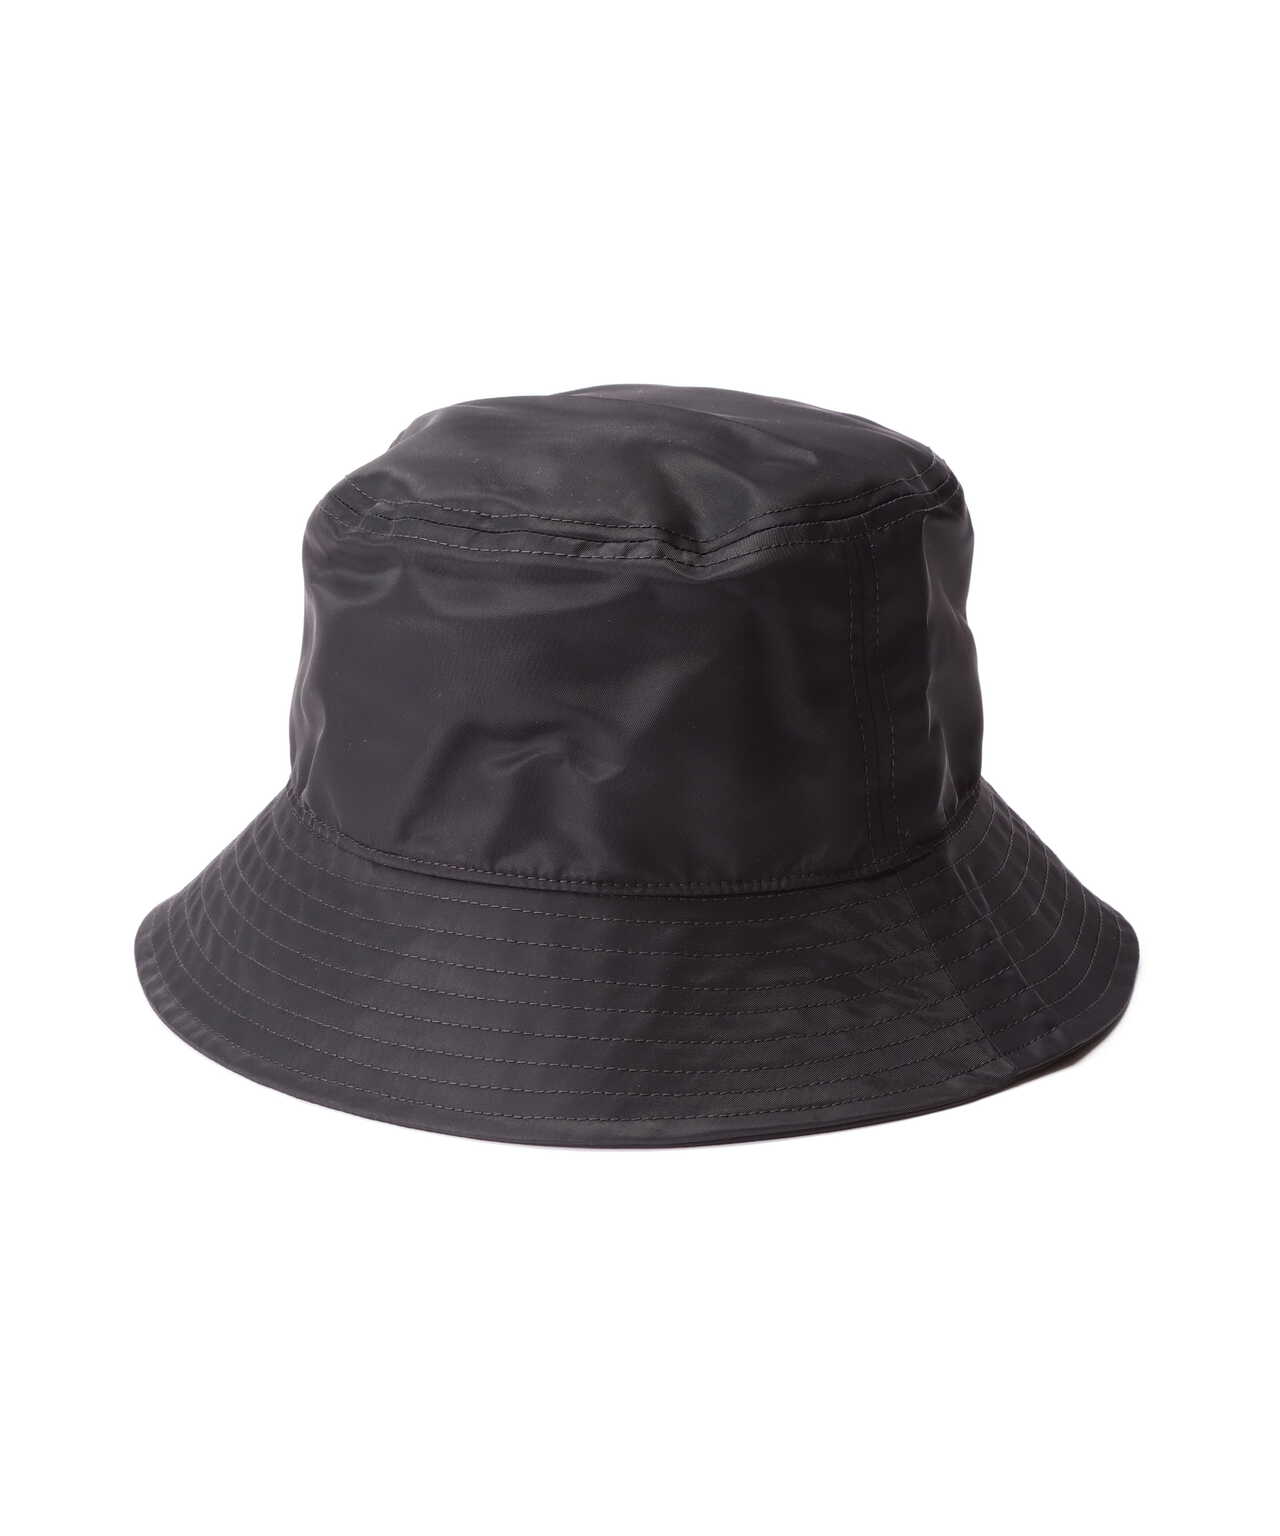 RAFSIMONS/ラフシモンズ/Bucket Hat With Small Leater/バケットハット 